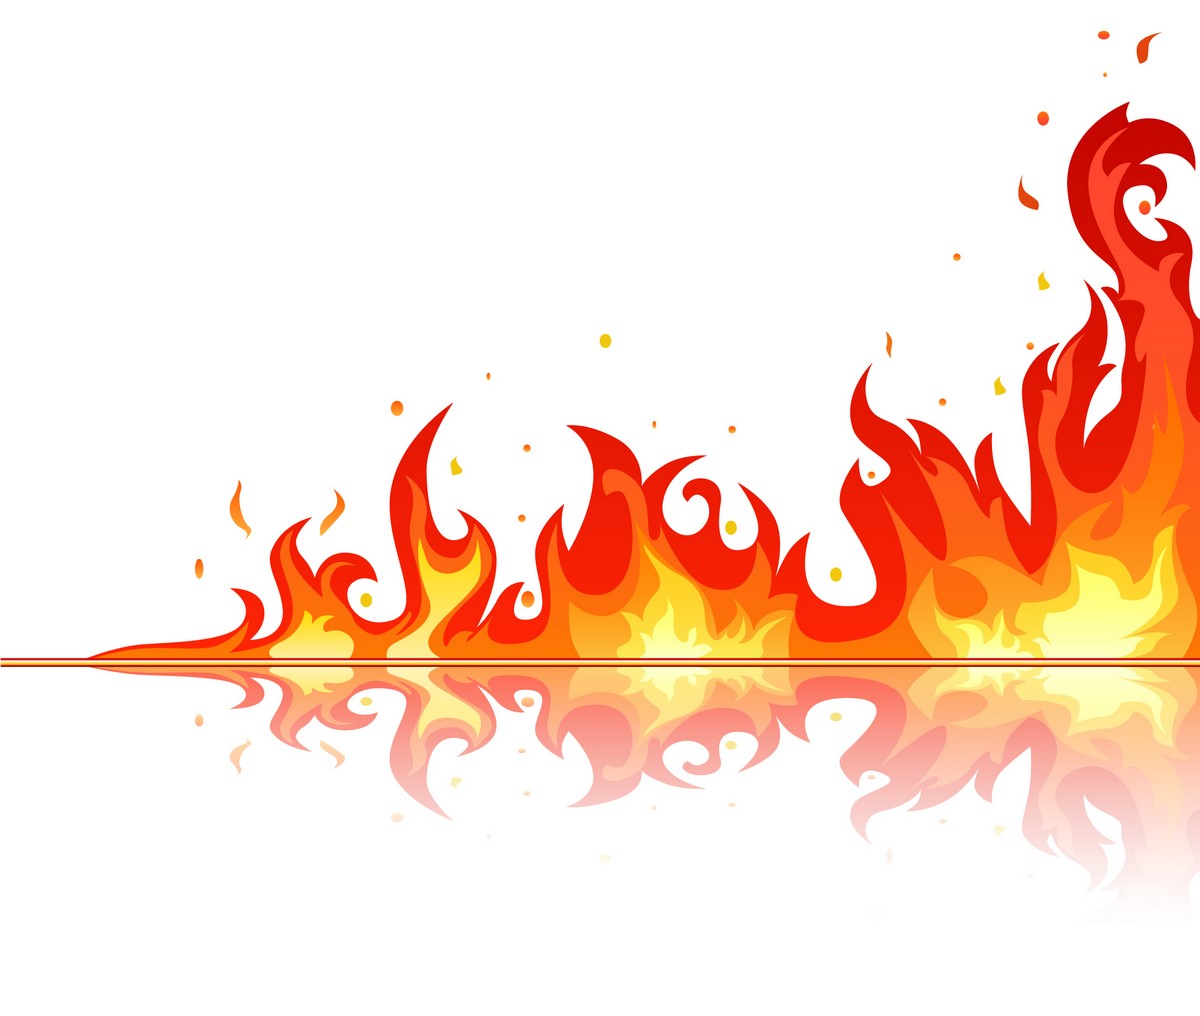 free vector clip art flames - photo #43